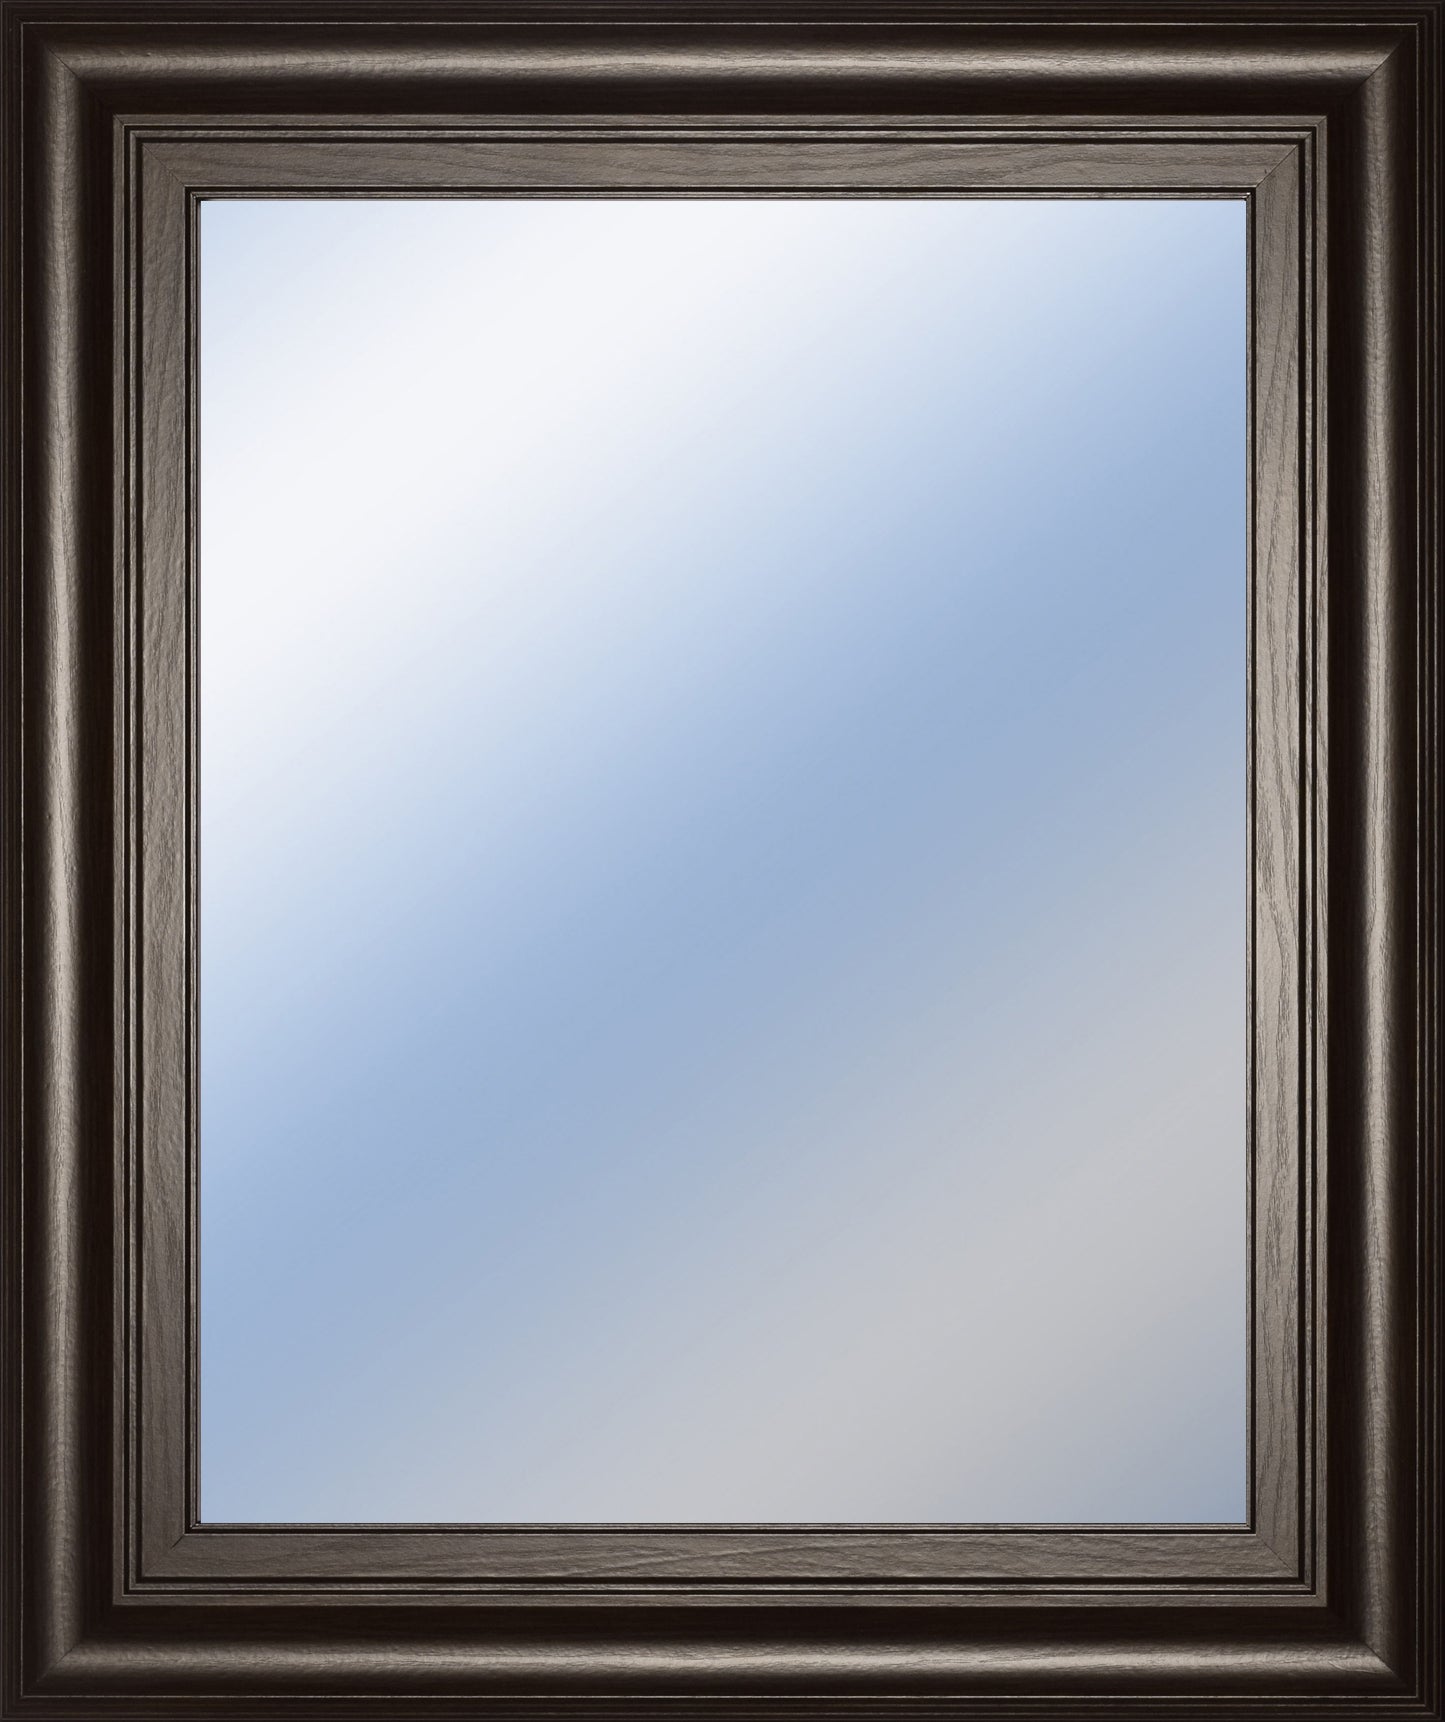 22x26 Decorative Framed Wall Mirror By Classy Art Promotional Mirror Frame #35 - Dark Brown